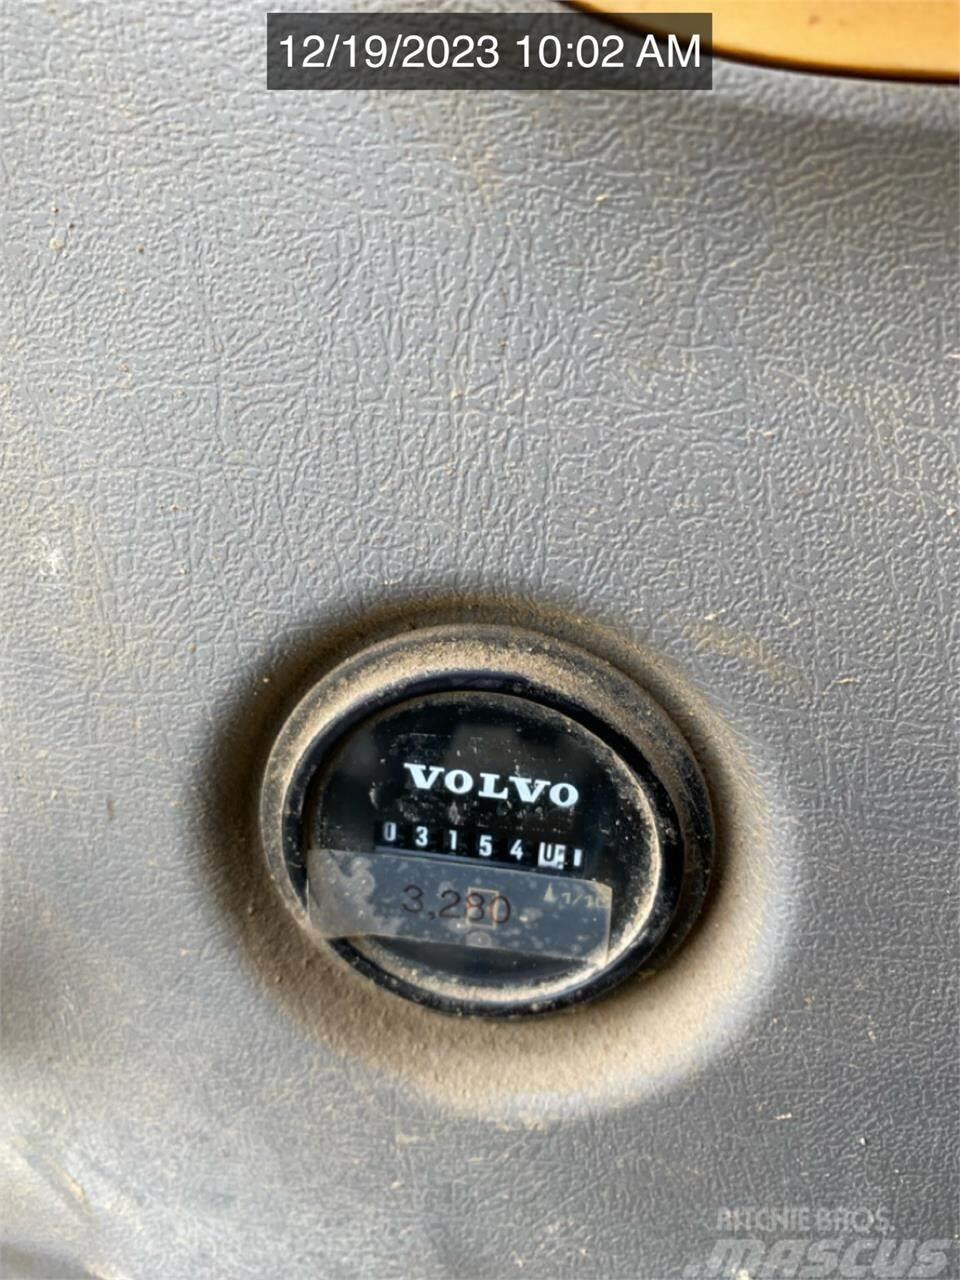 Volvo ECR88D Vikšriniai ekskavatoriai